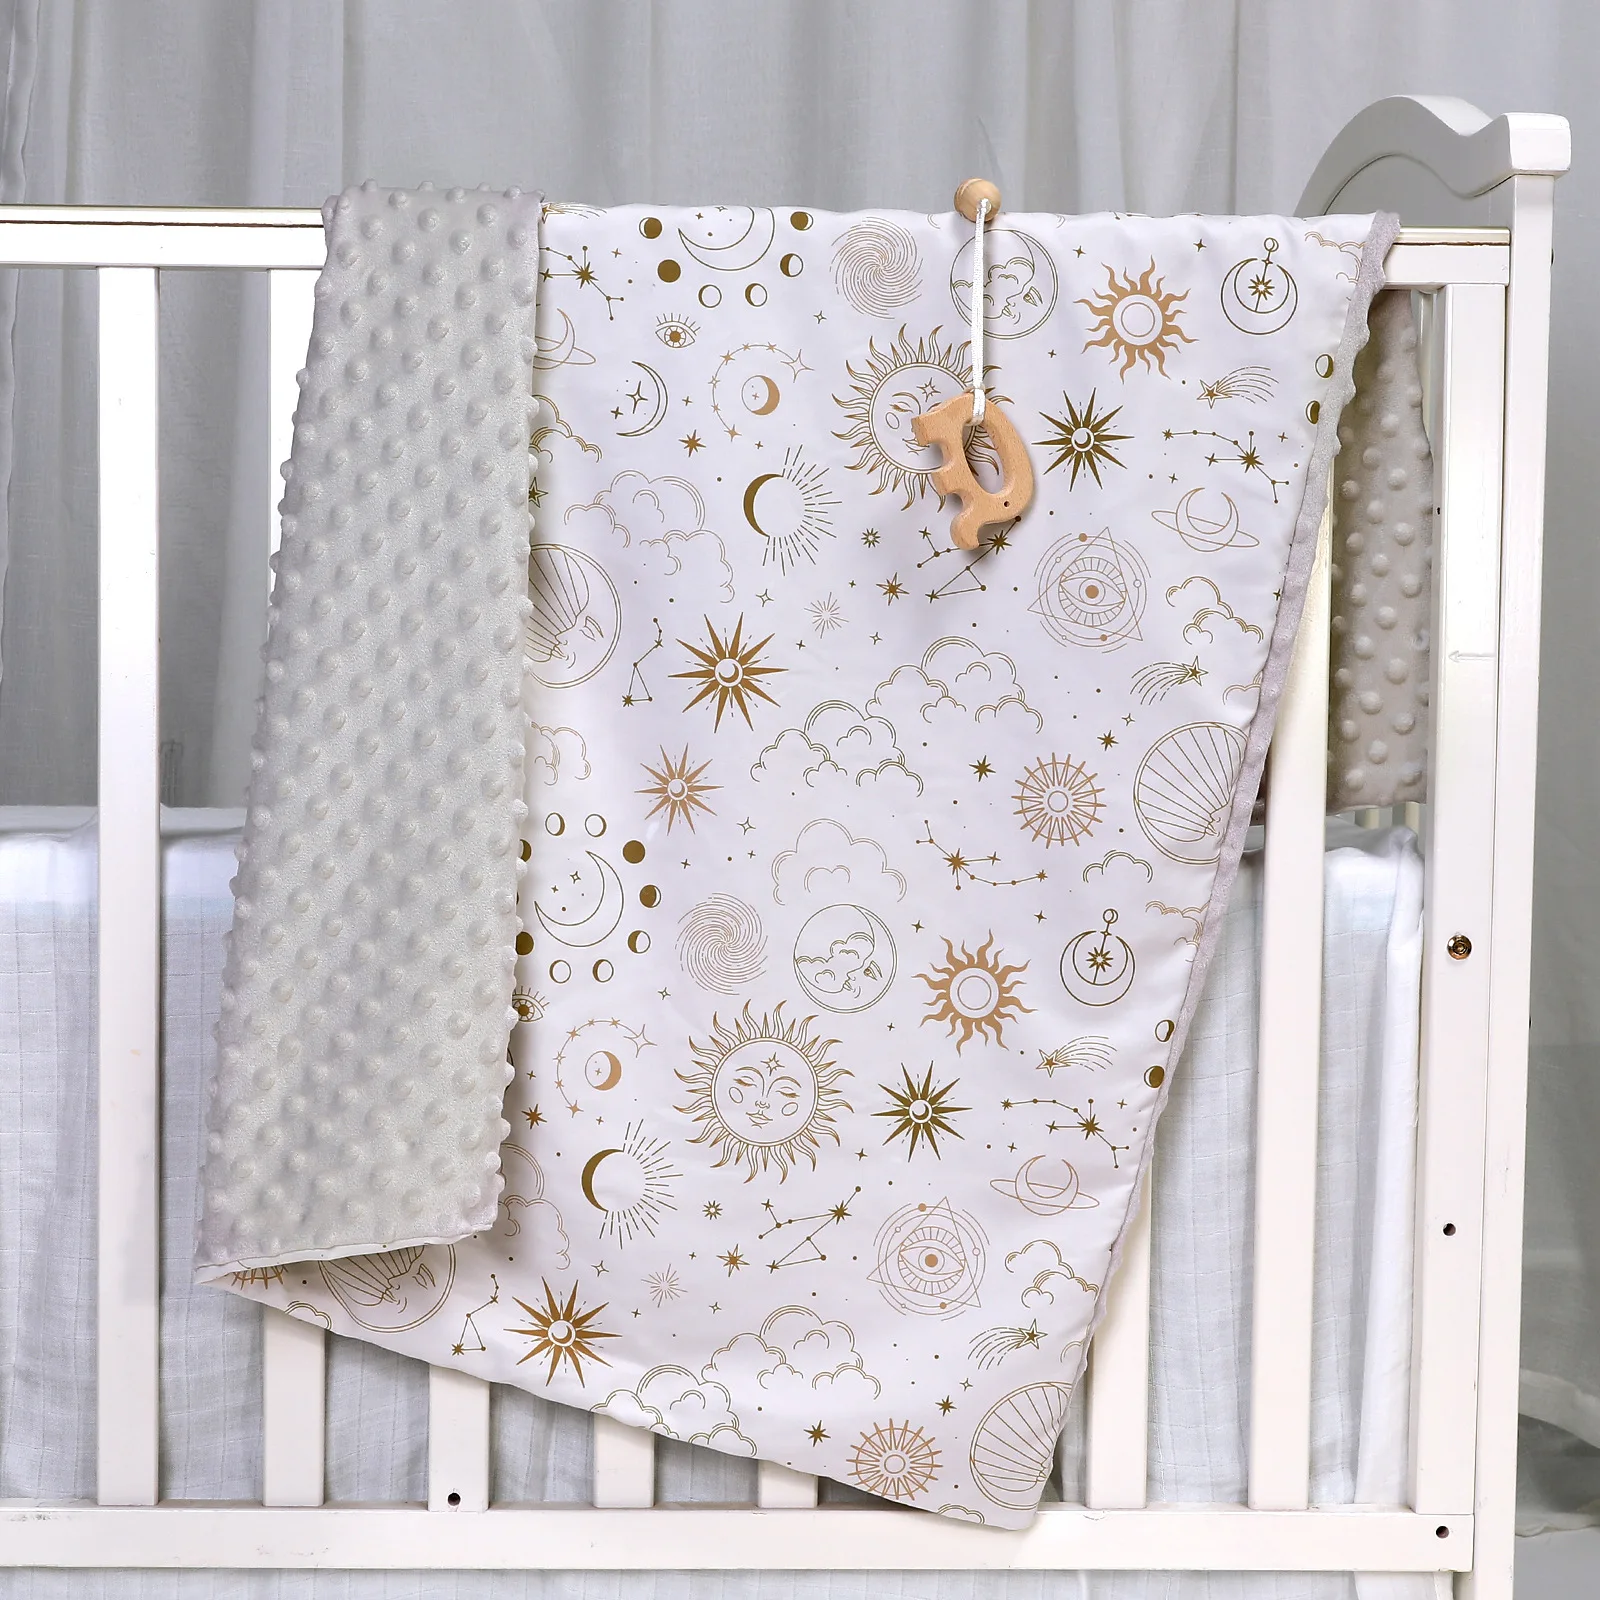 75x100cm Baby Blanket Super Warm Velvet Coral Fleece Beans Infant Blankets Newborn Double Layer Autumn Winter Blanket Quilt